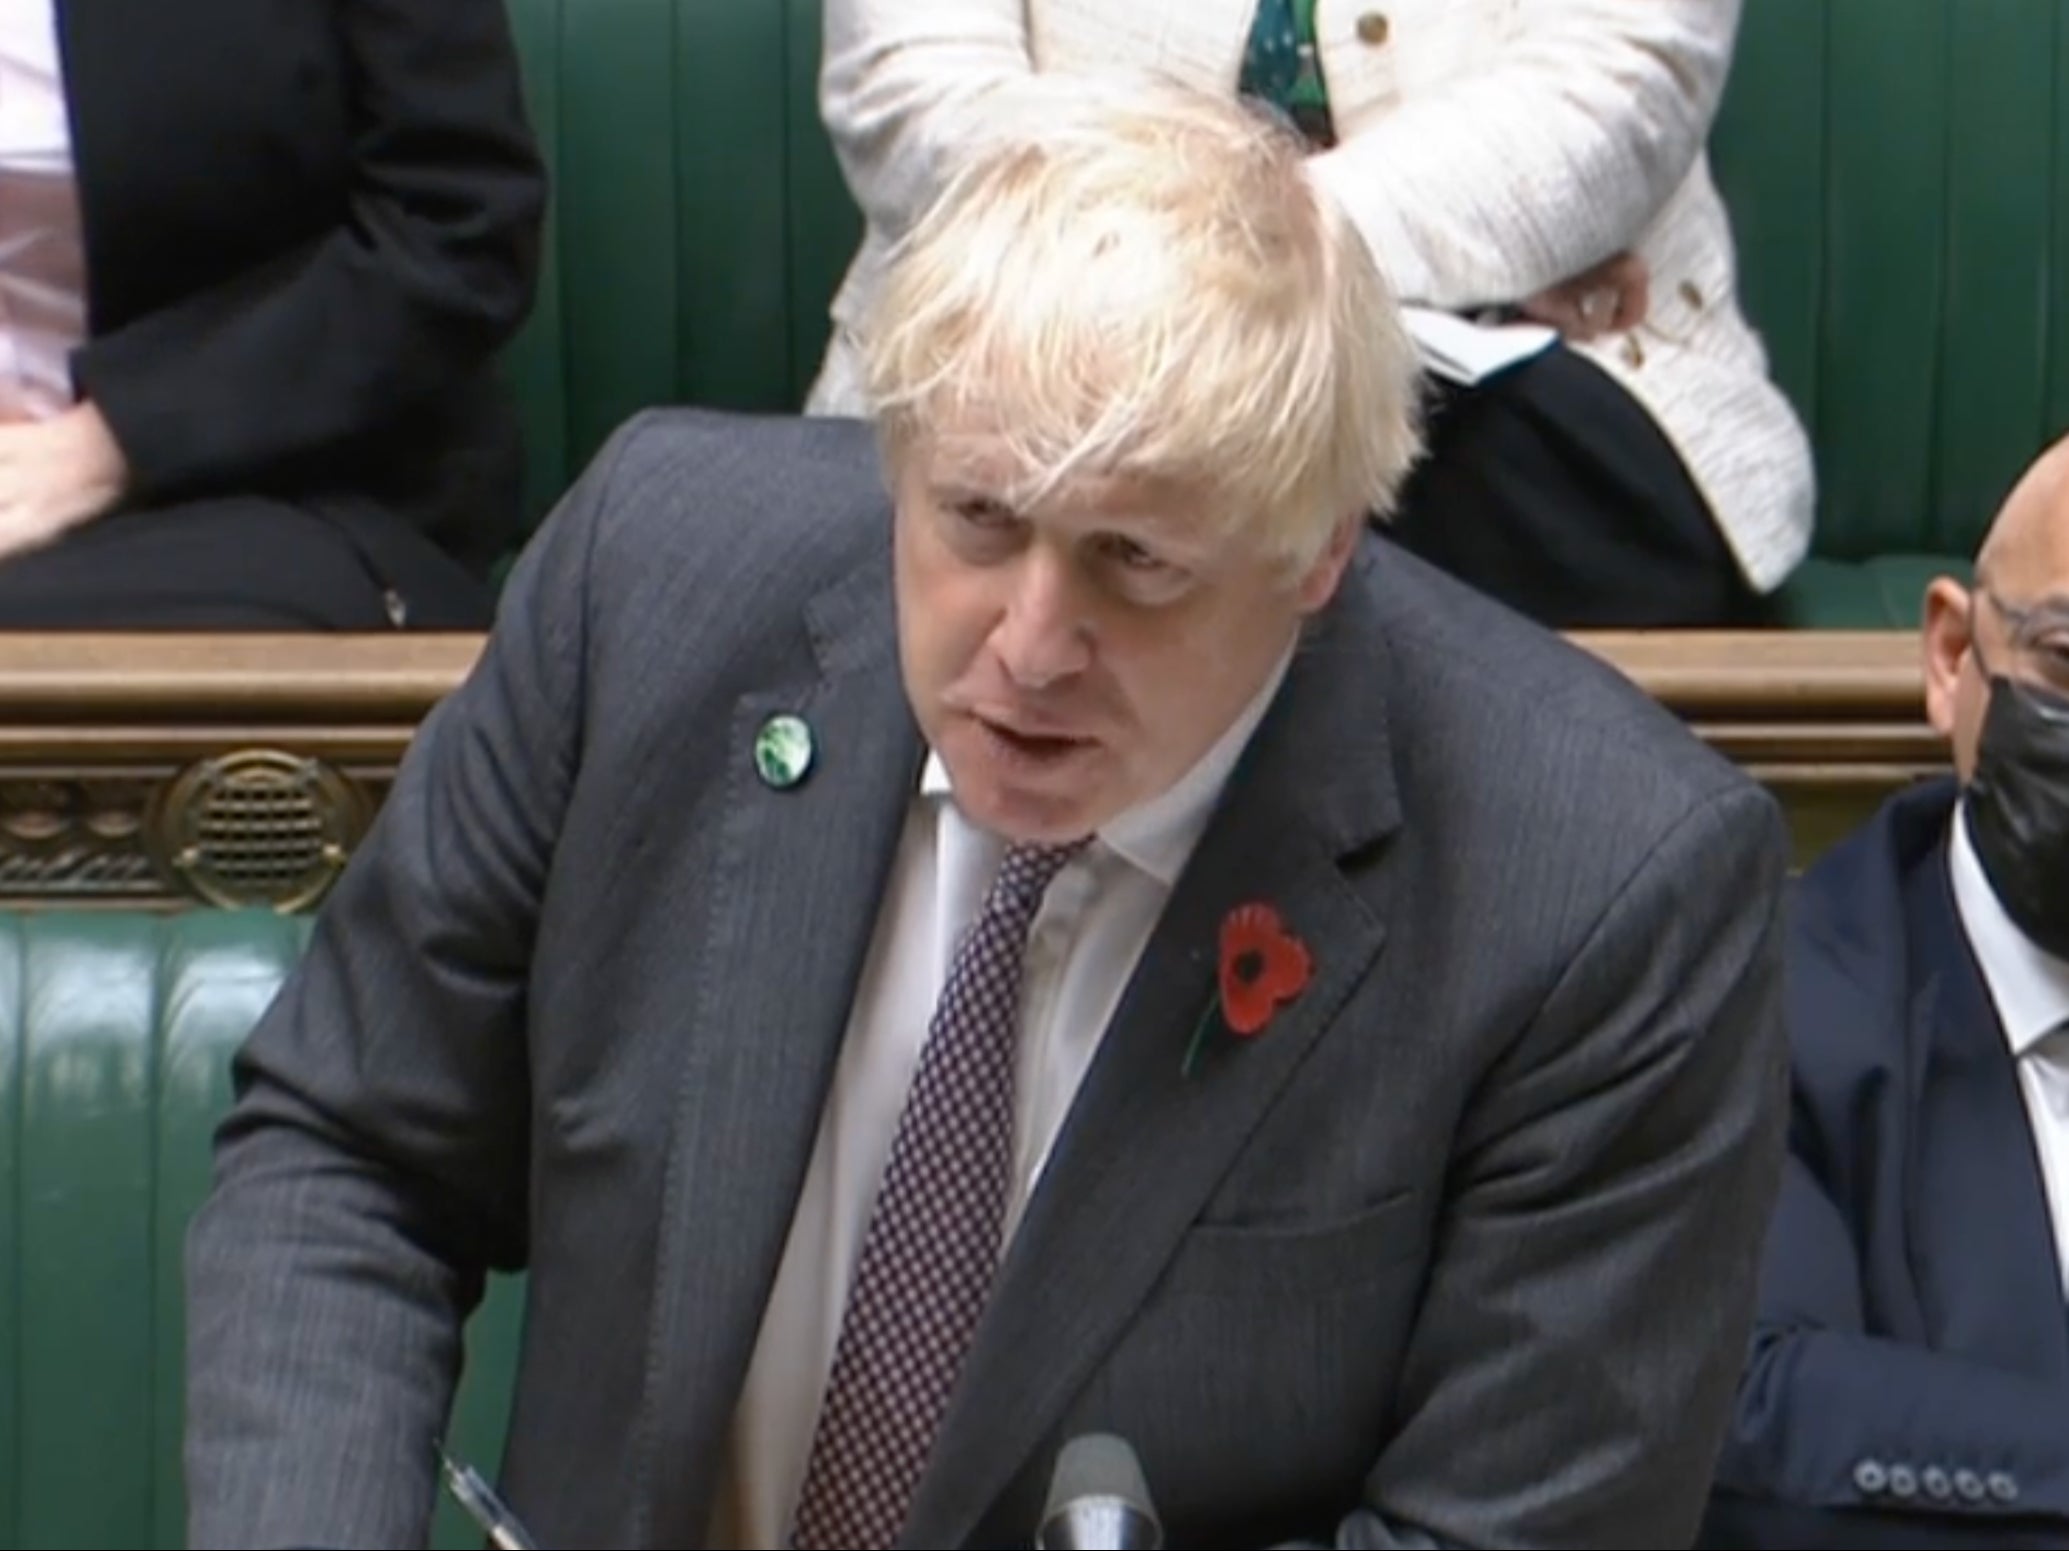 Boris Johnson makes his Cop26 statement to parliament on Wednesday